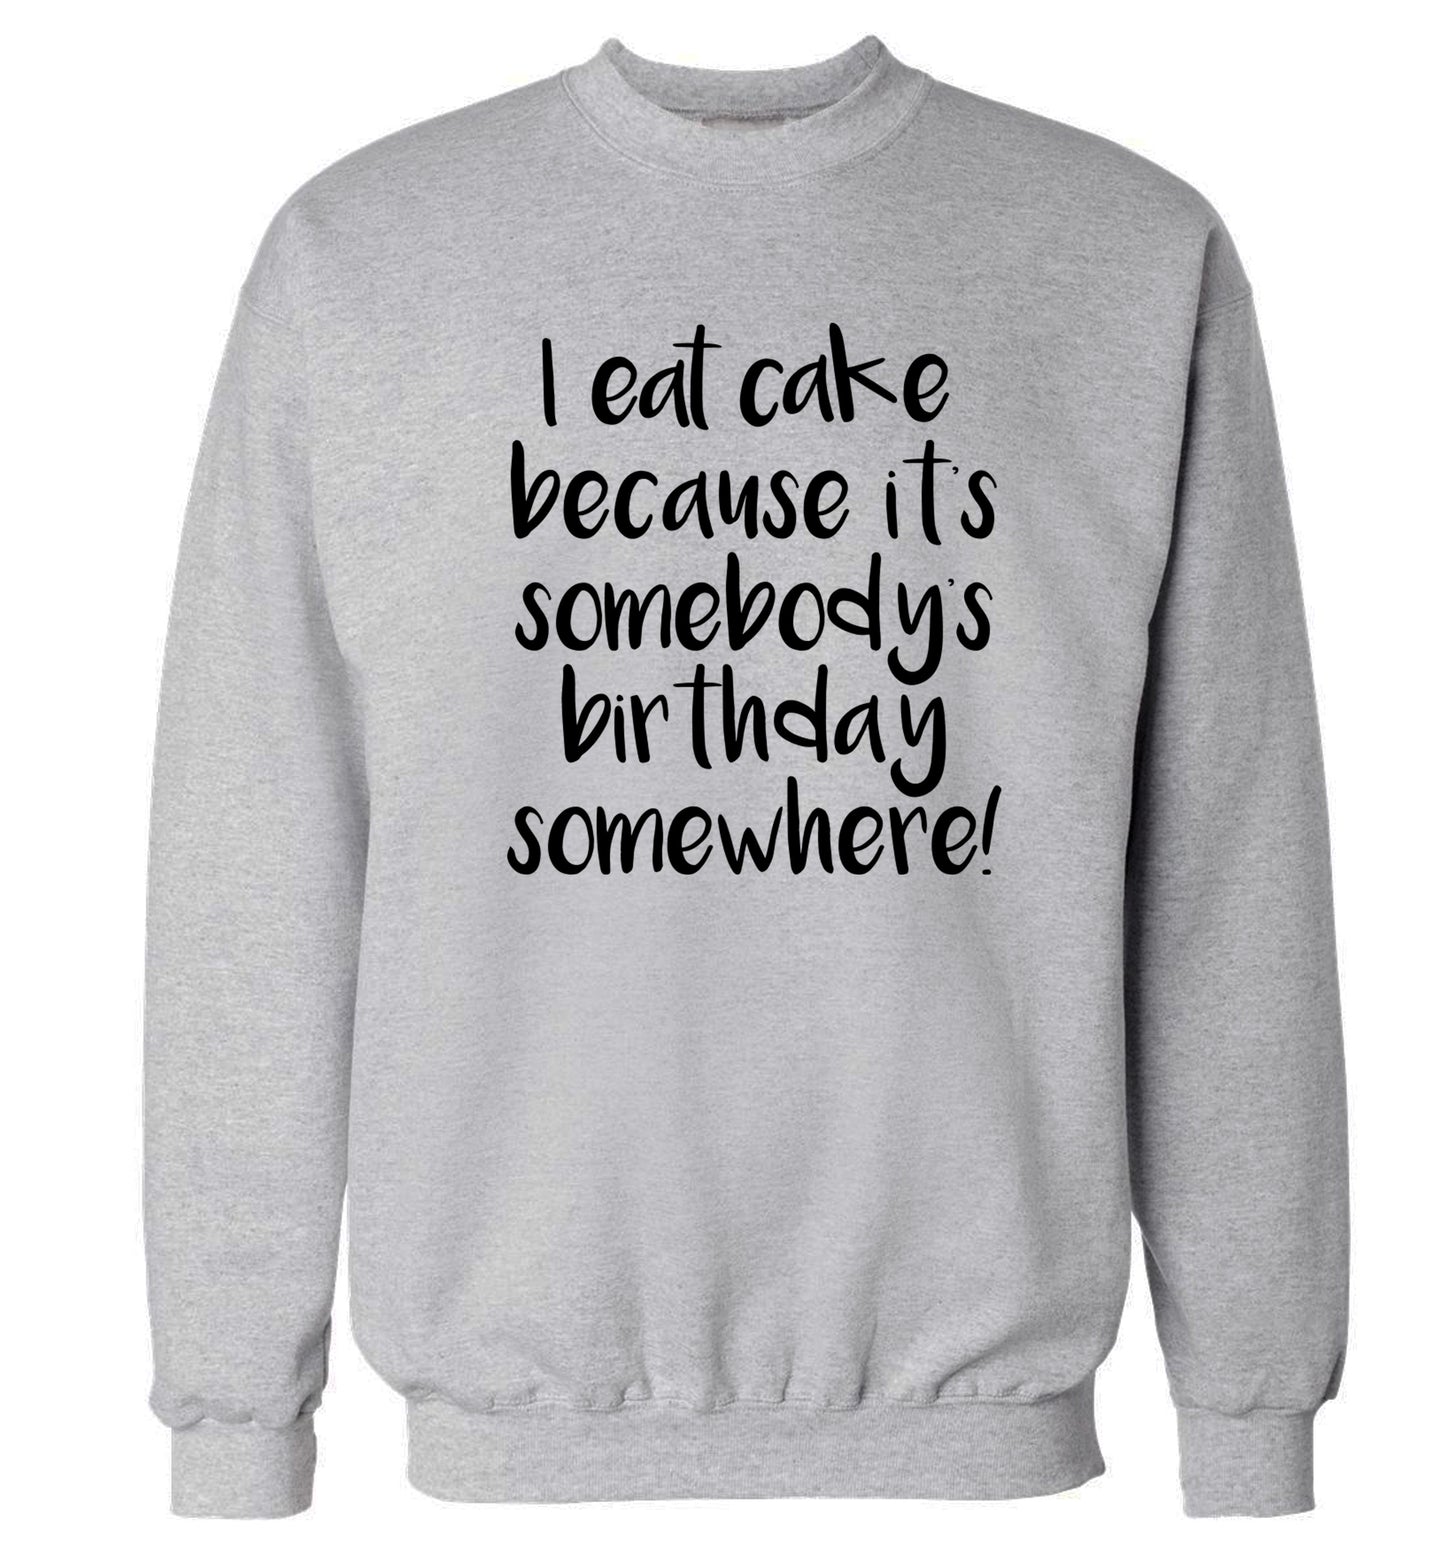 I eat cake because it's somebody's birthday somewhere! Adult's unisex grey Sweater 2XL